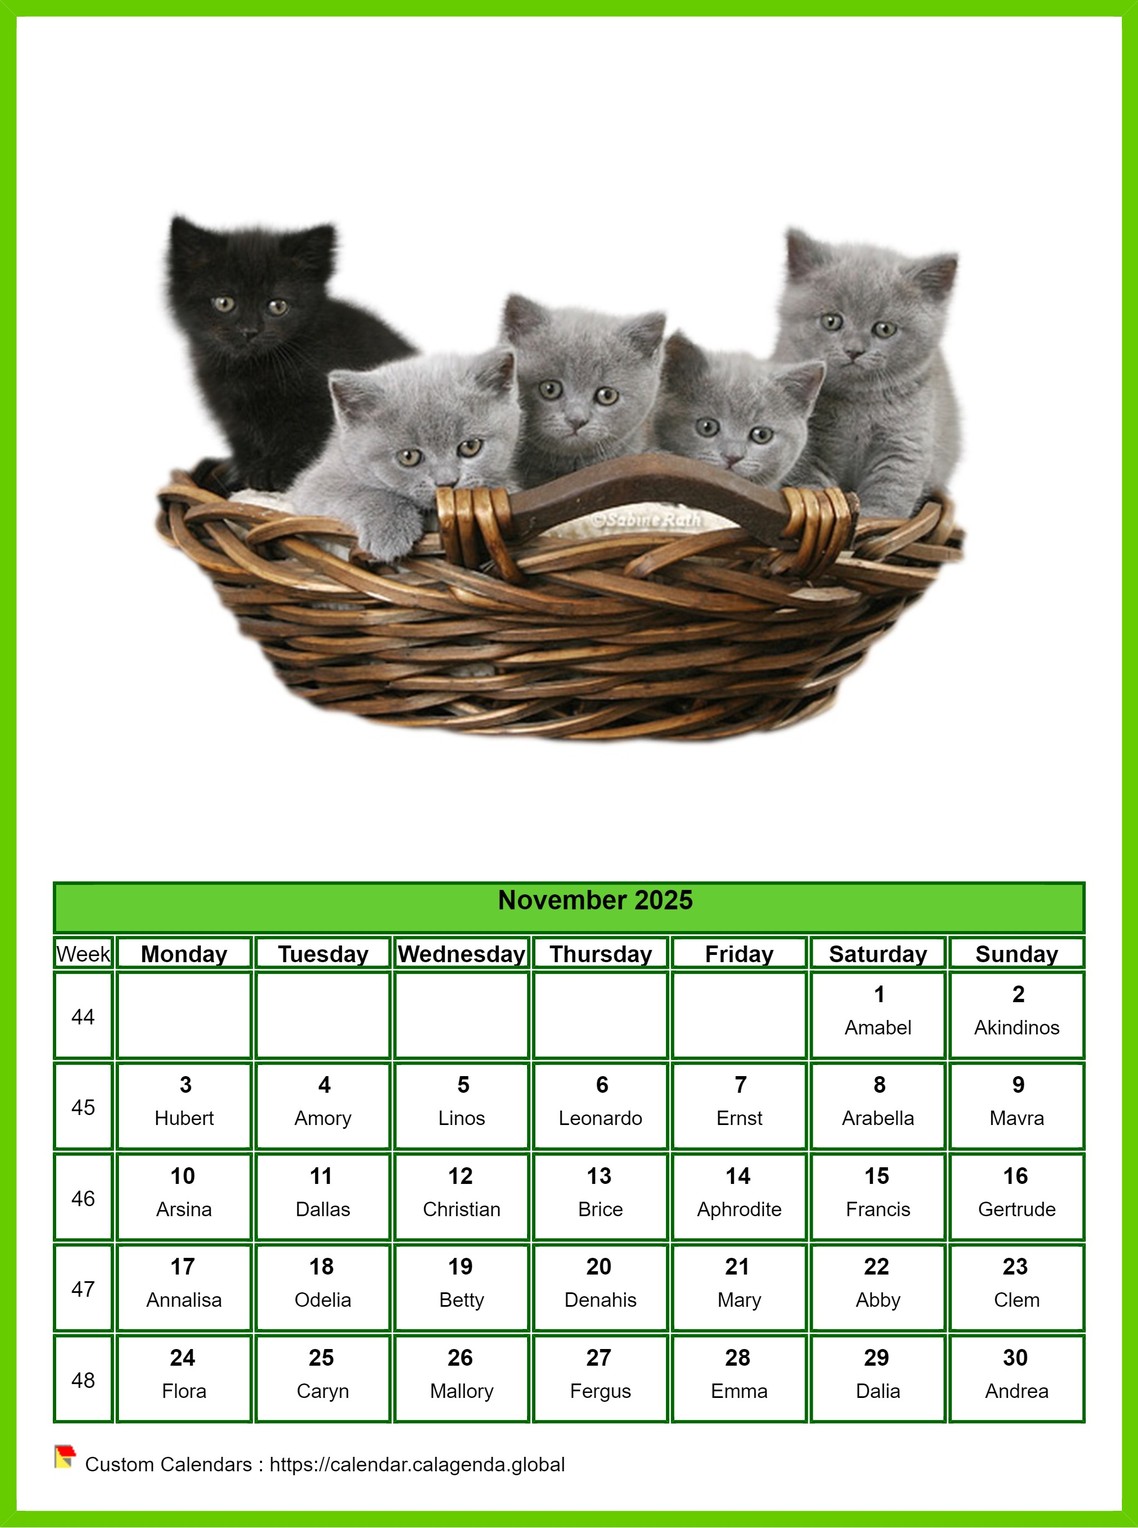 Calendar November 2025 cats